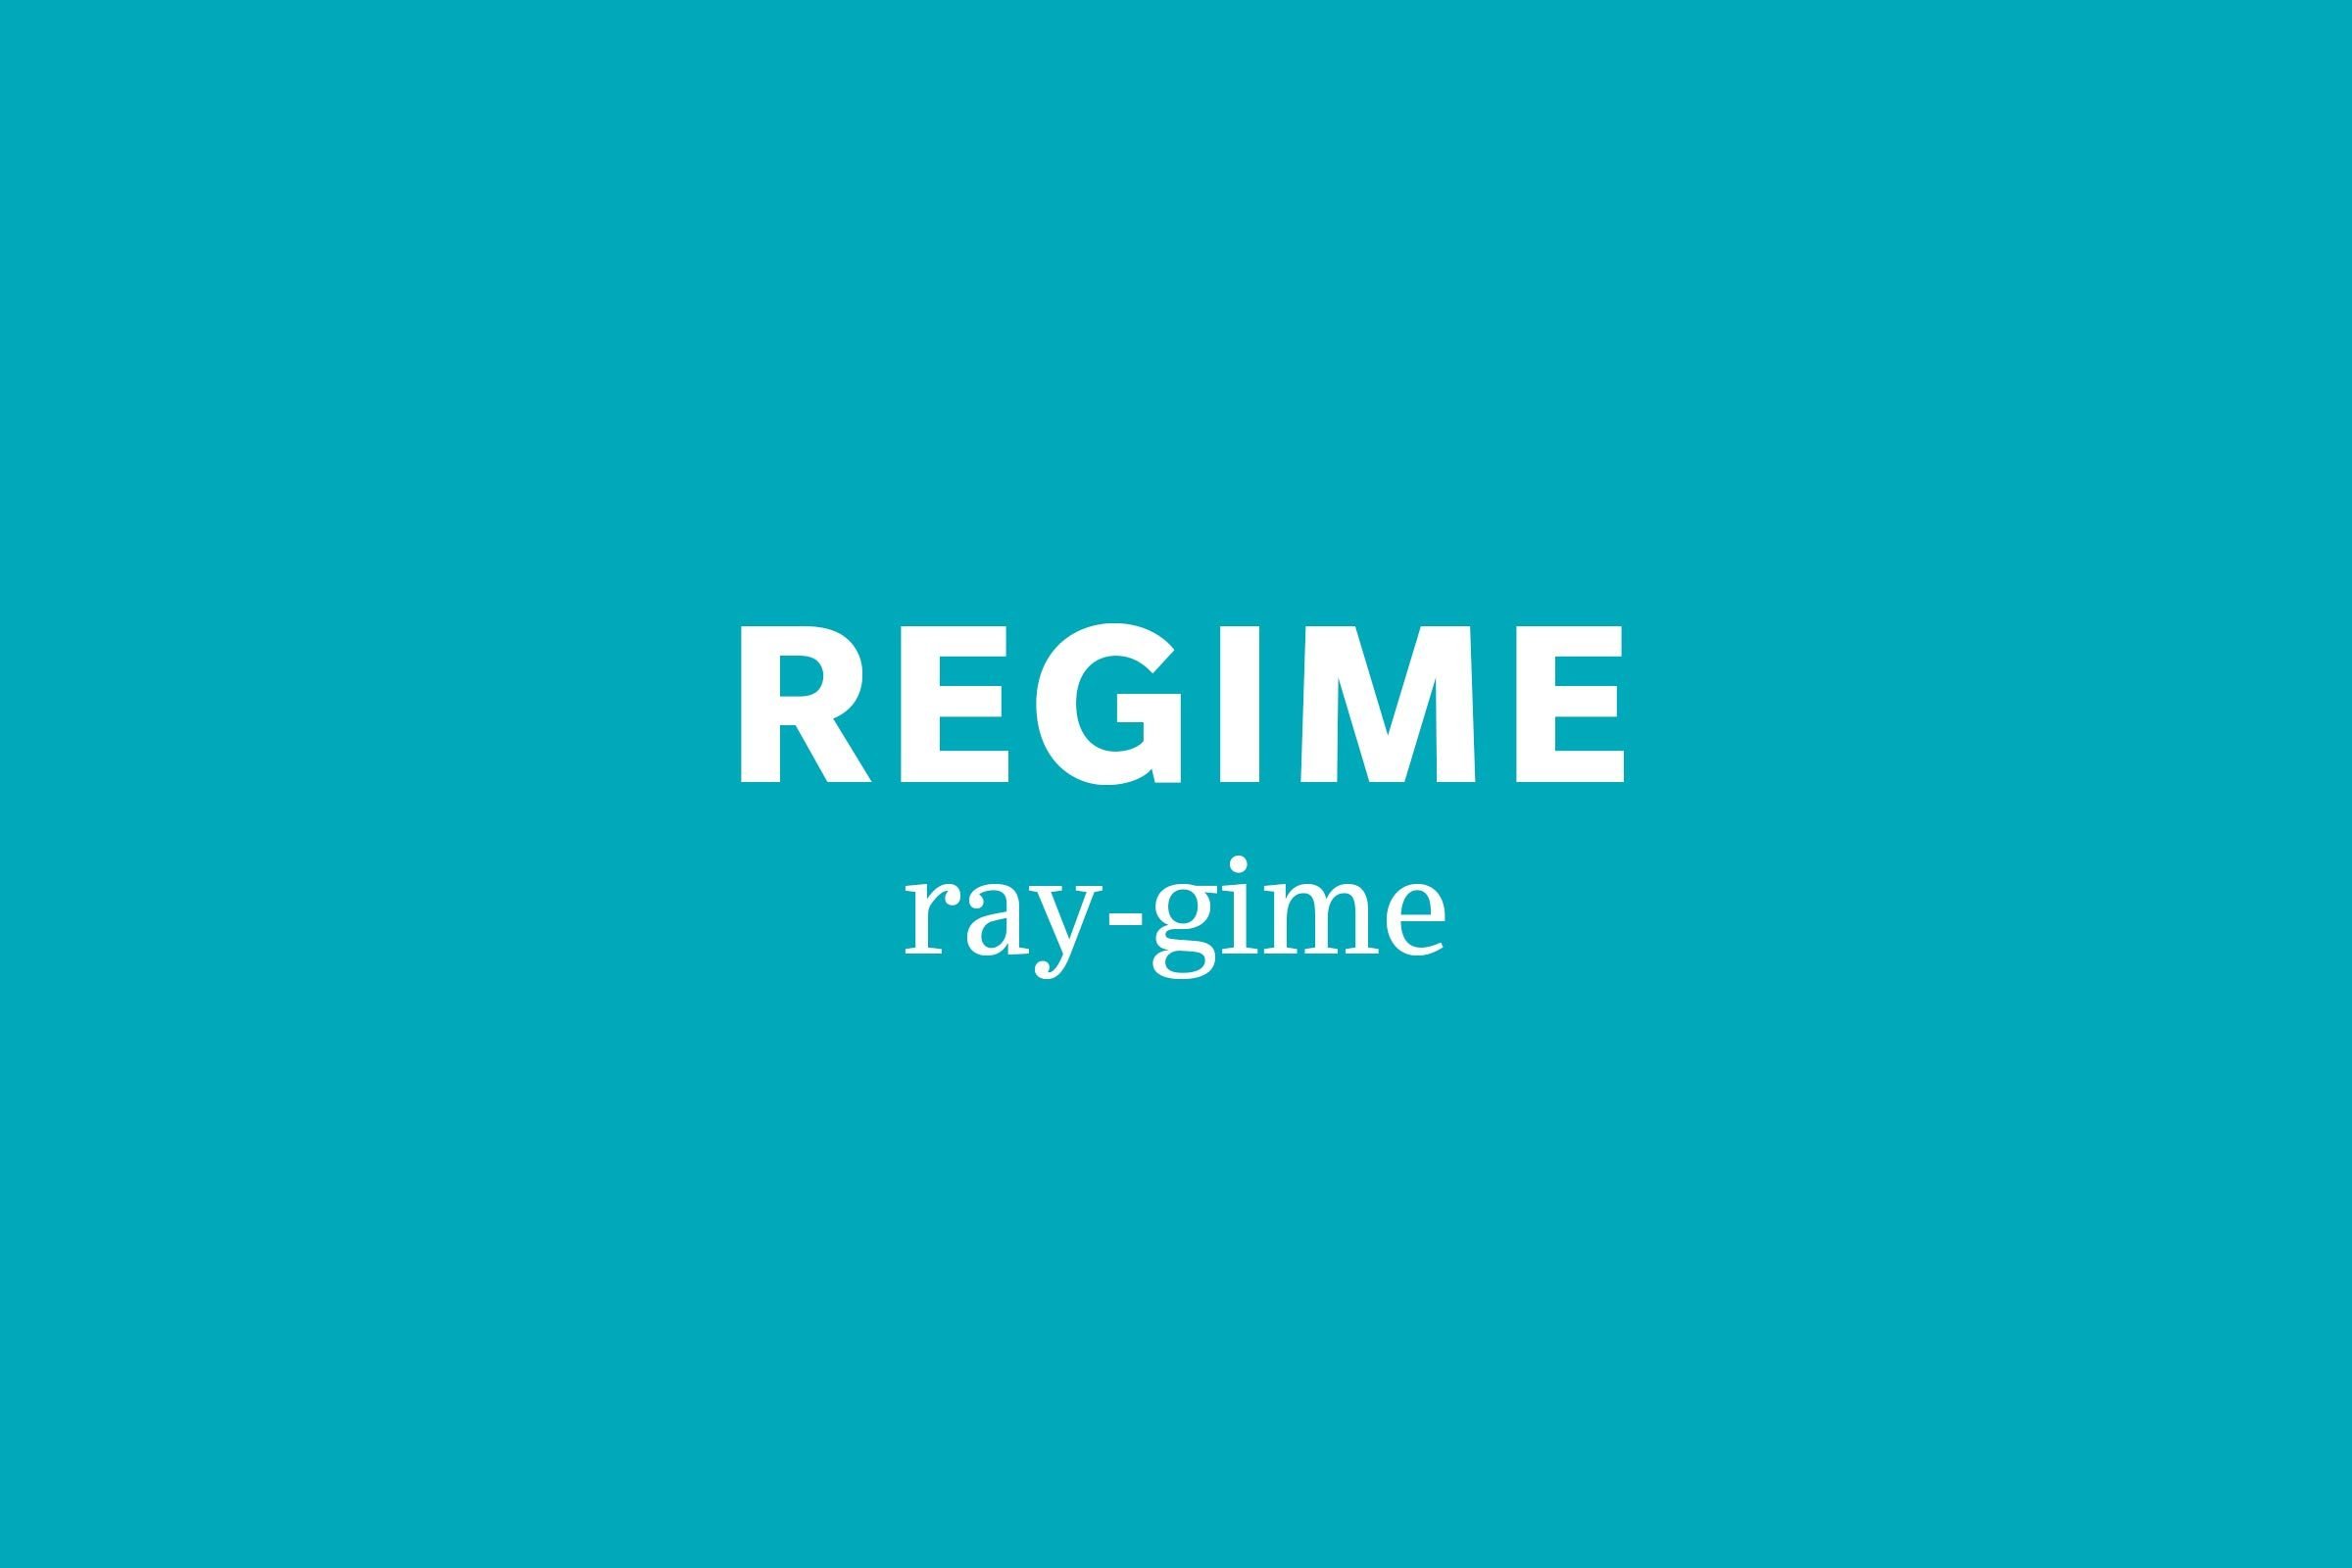 regime pronunciation